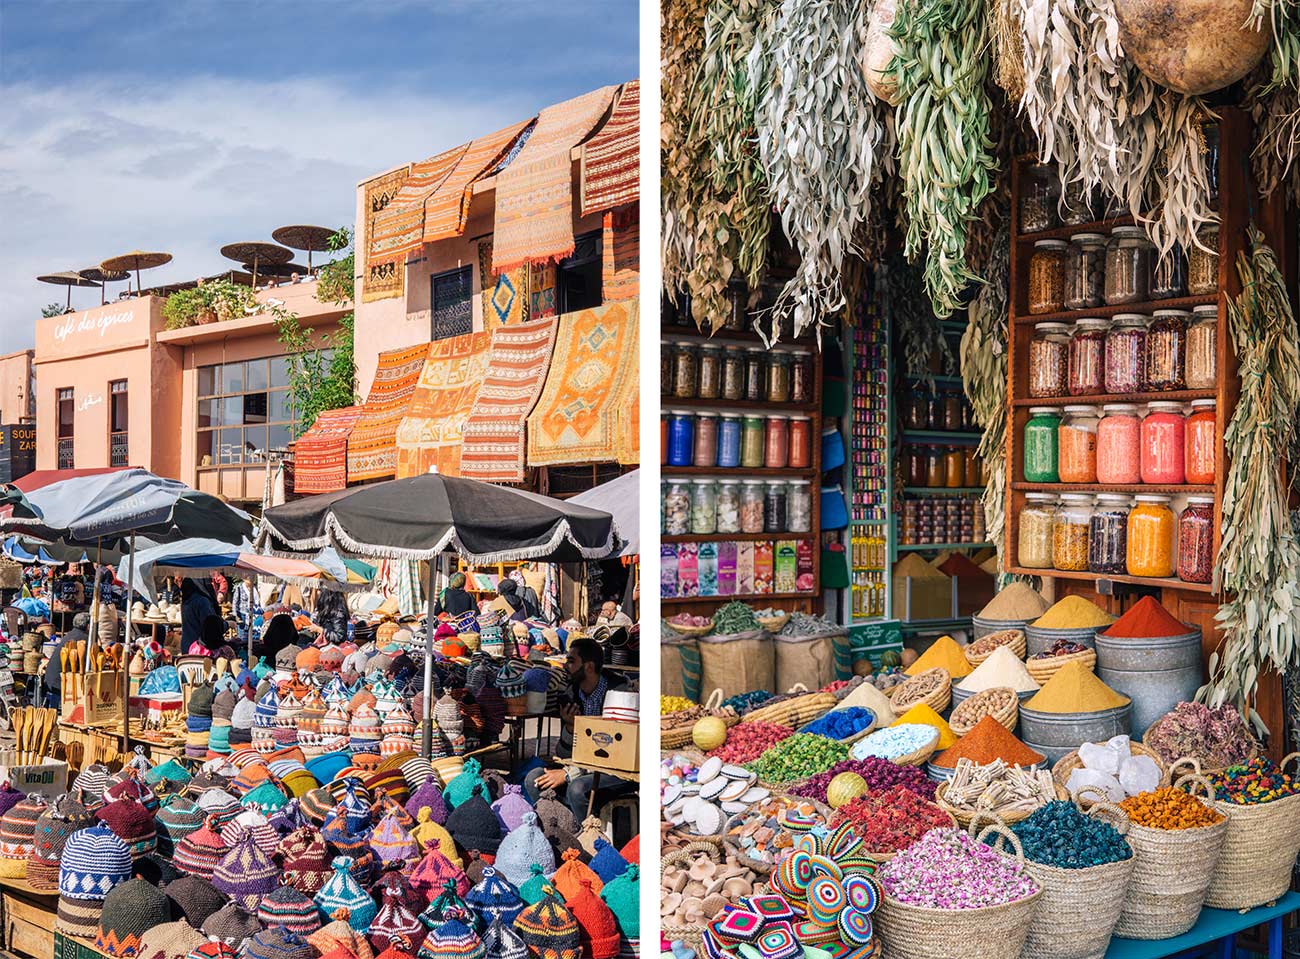 Spice market souks Morocco travel blog post